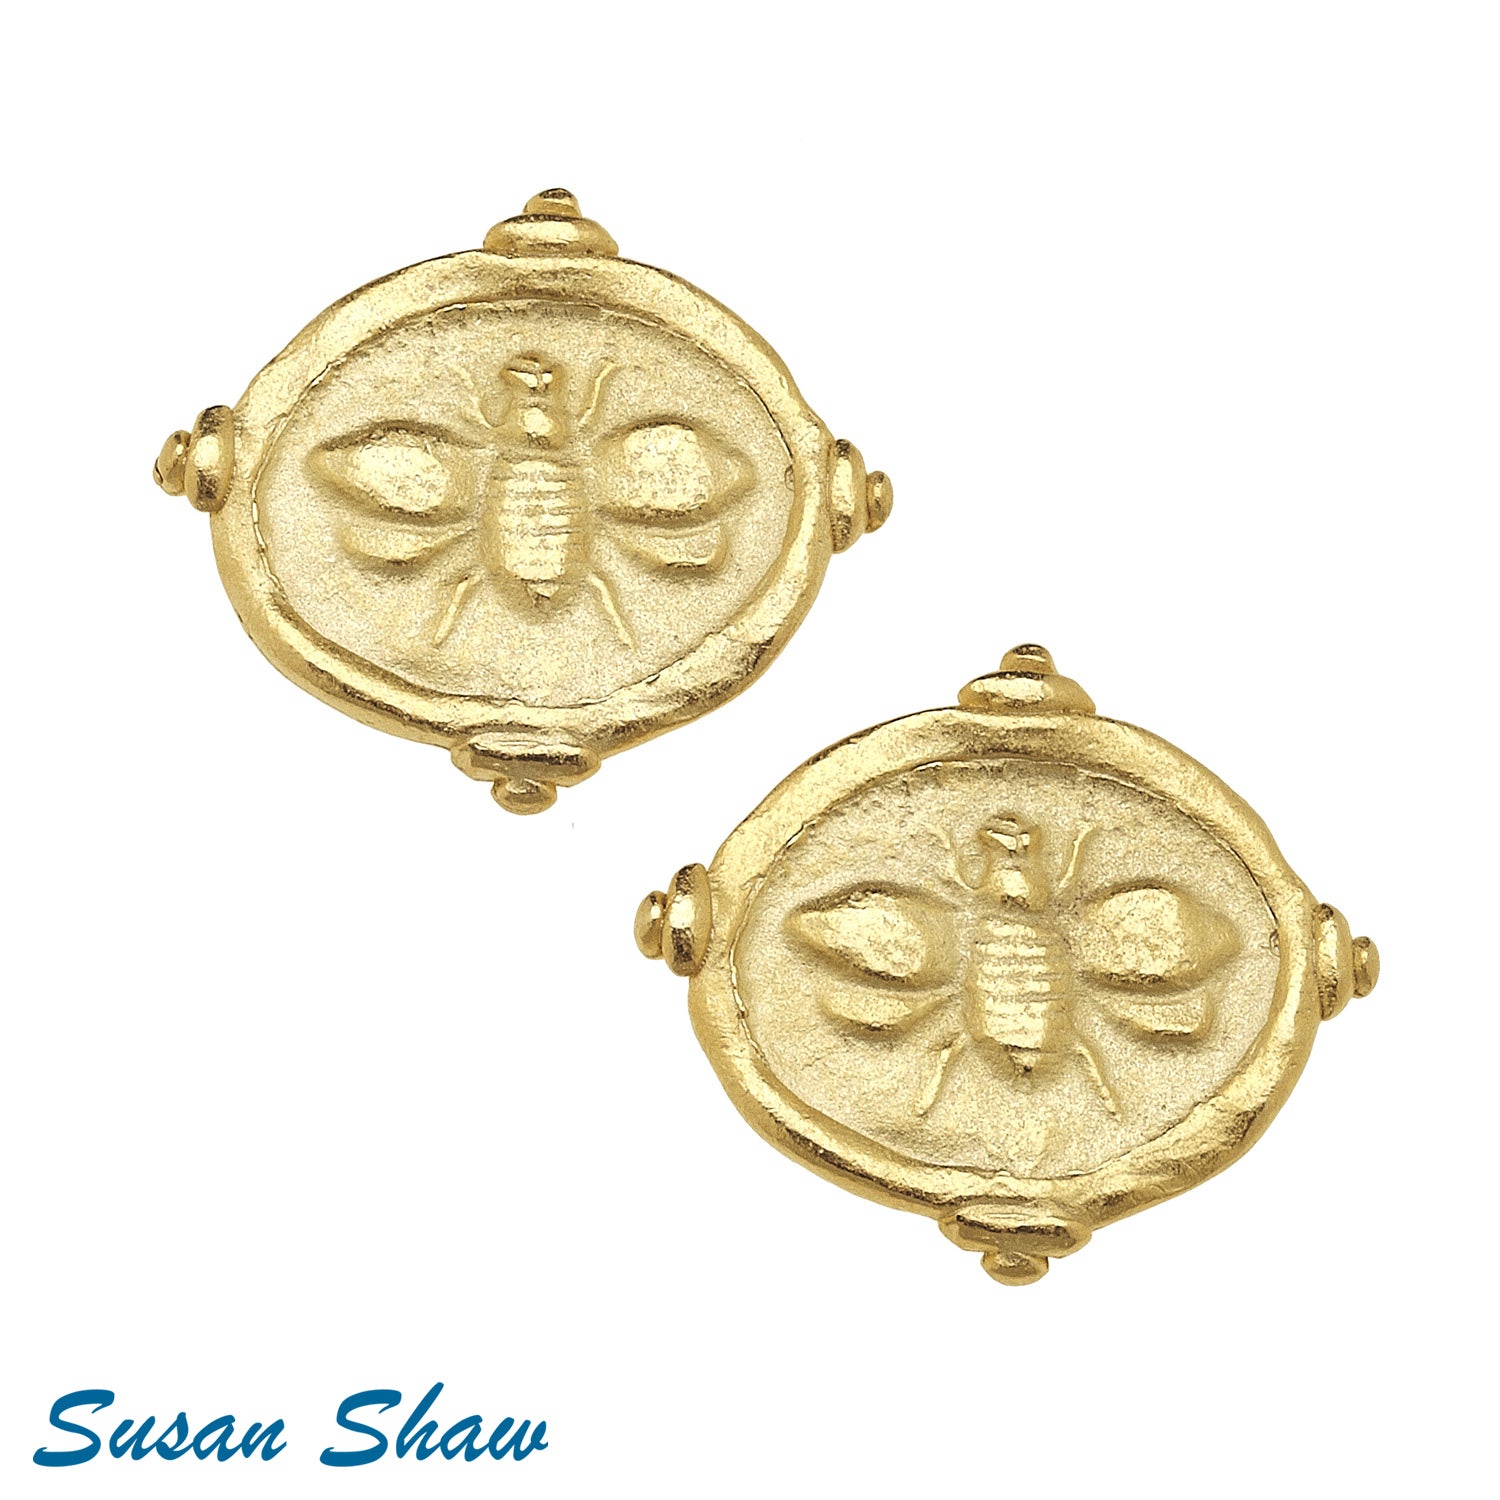 Susan Shaw Handcast Gold "Bee" Intaglio CLIP Earrings.